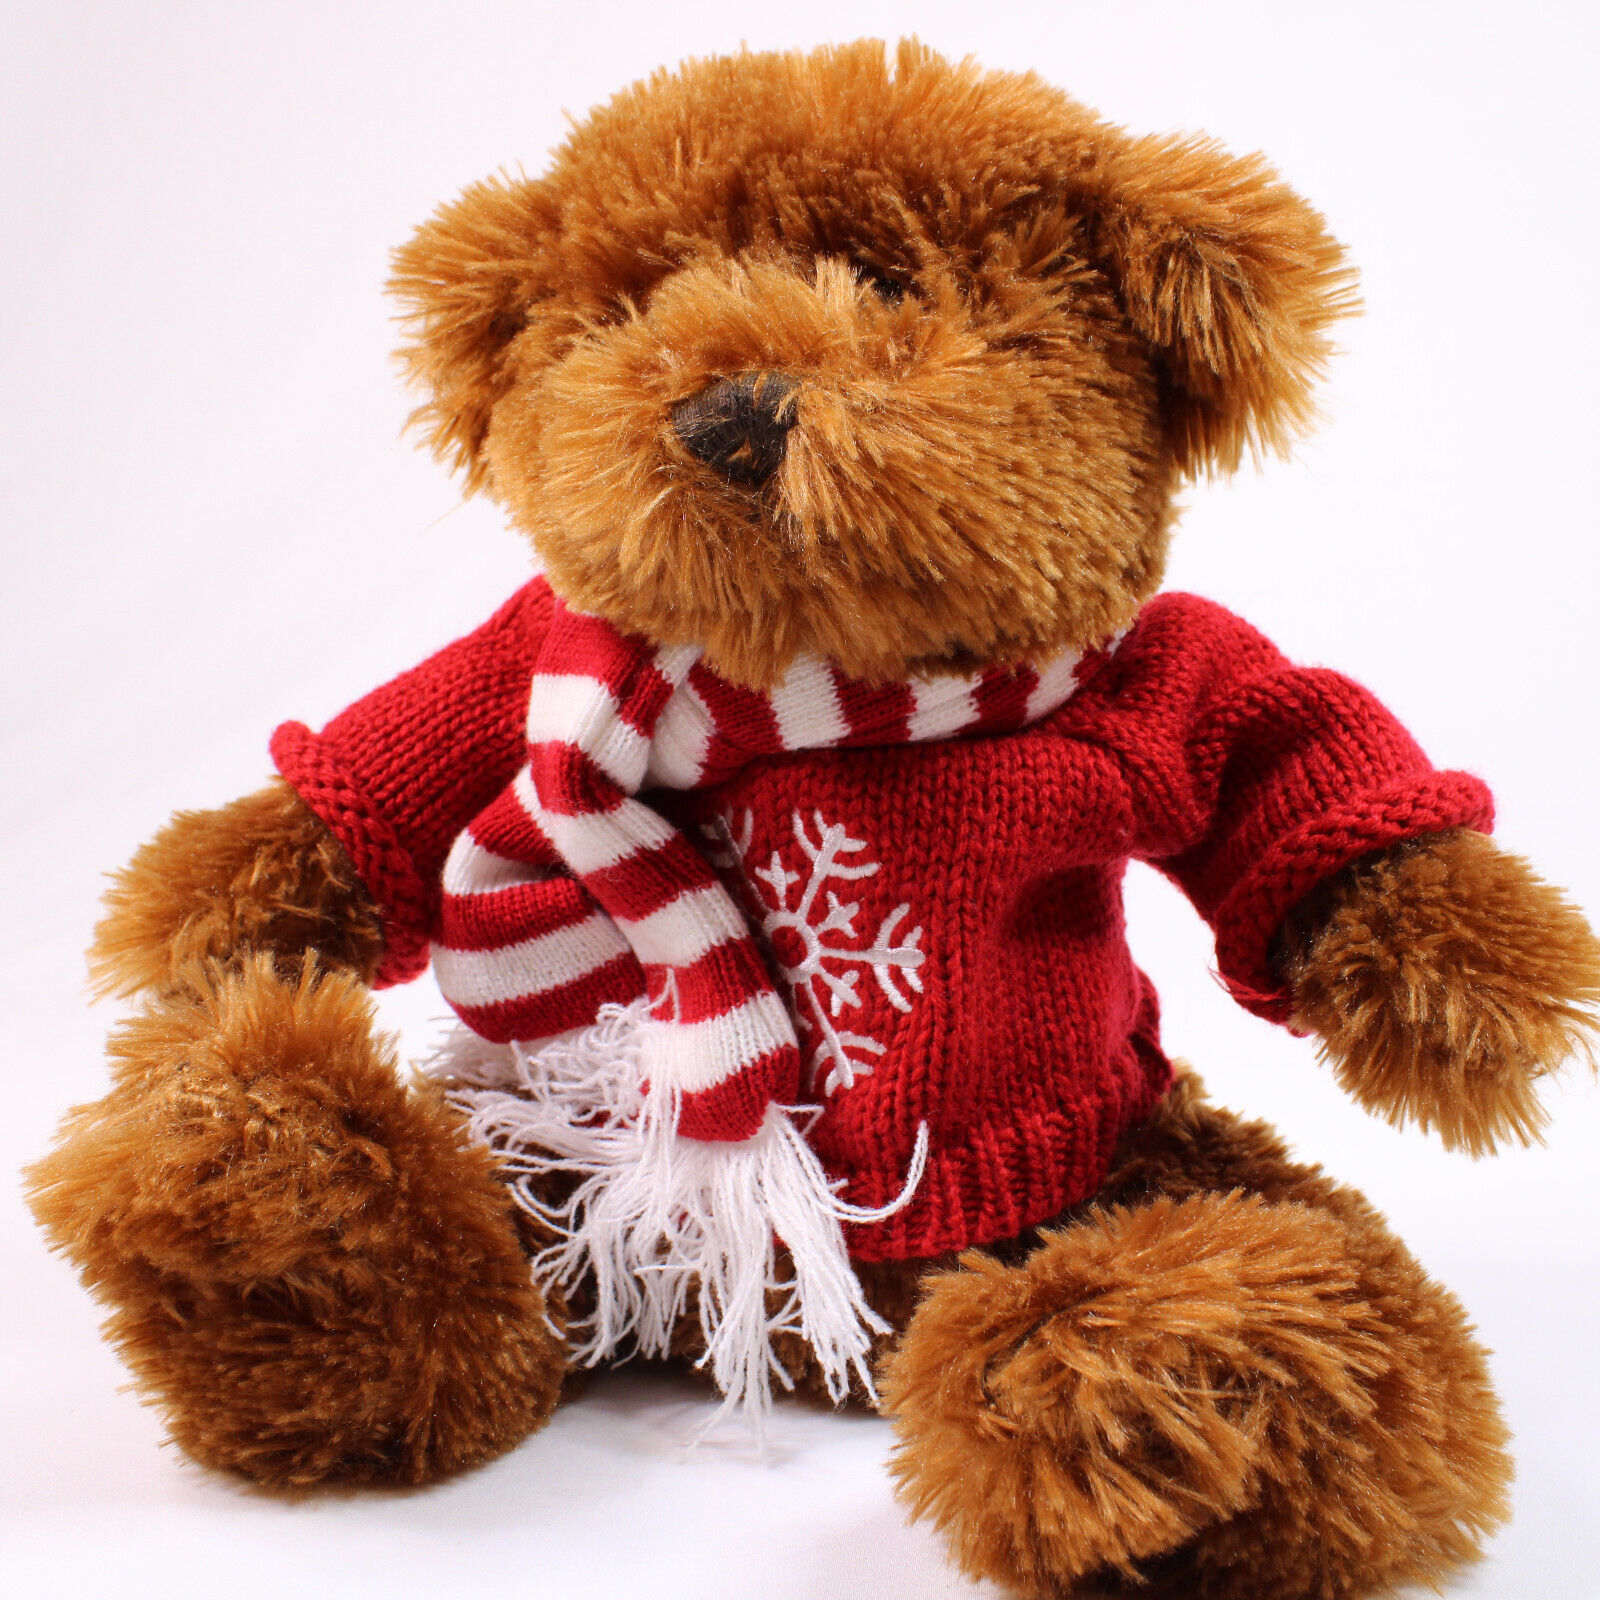 Animal Adventure Brown Teddy Bear Red Knit Sweater & Scarf Fuzzy Plush Bear 2009 - $11.65